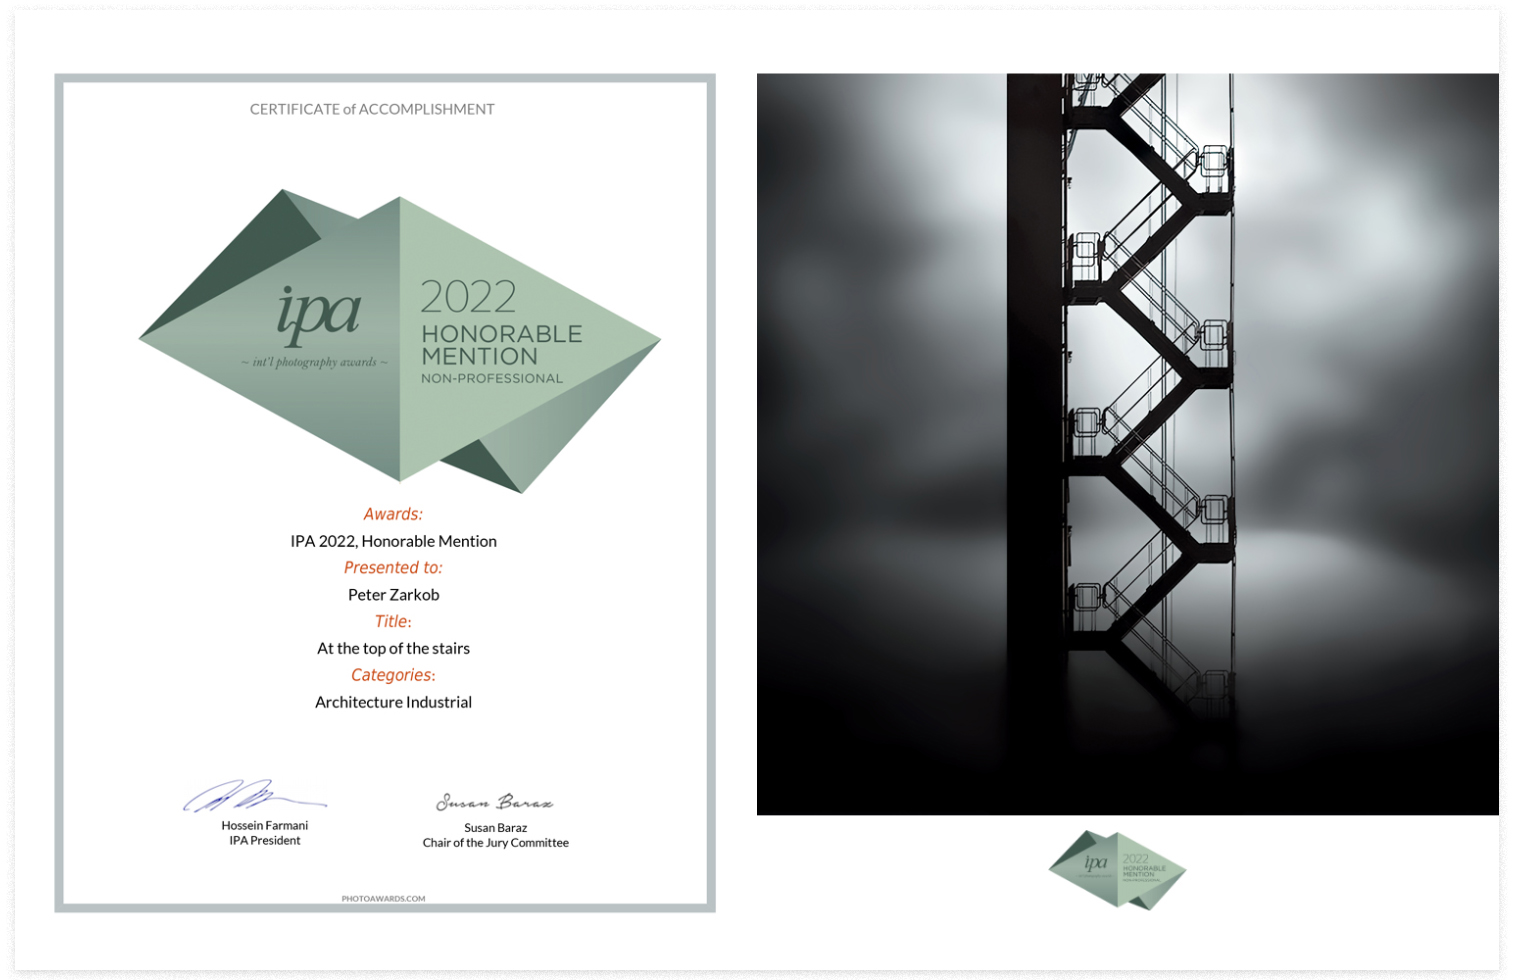 International Photography Awards (IPA)